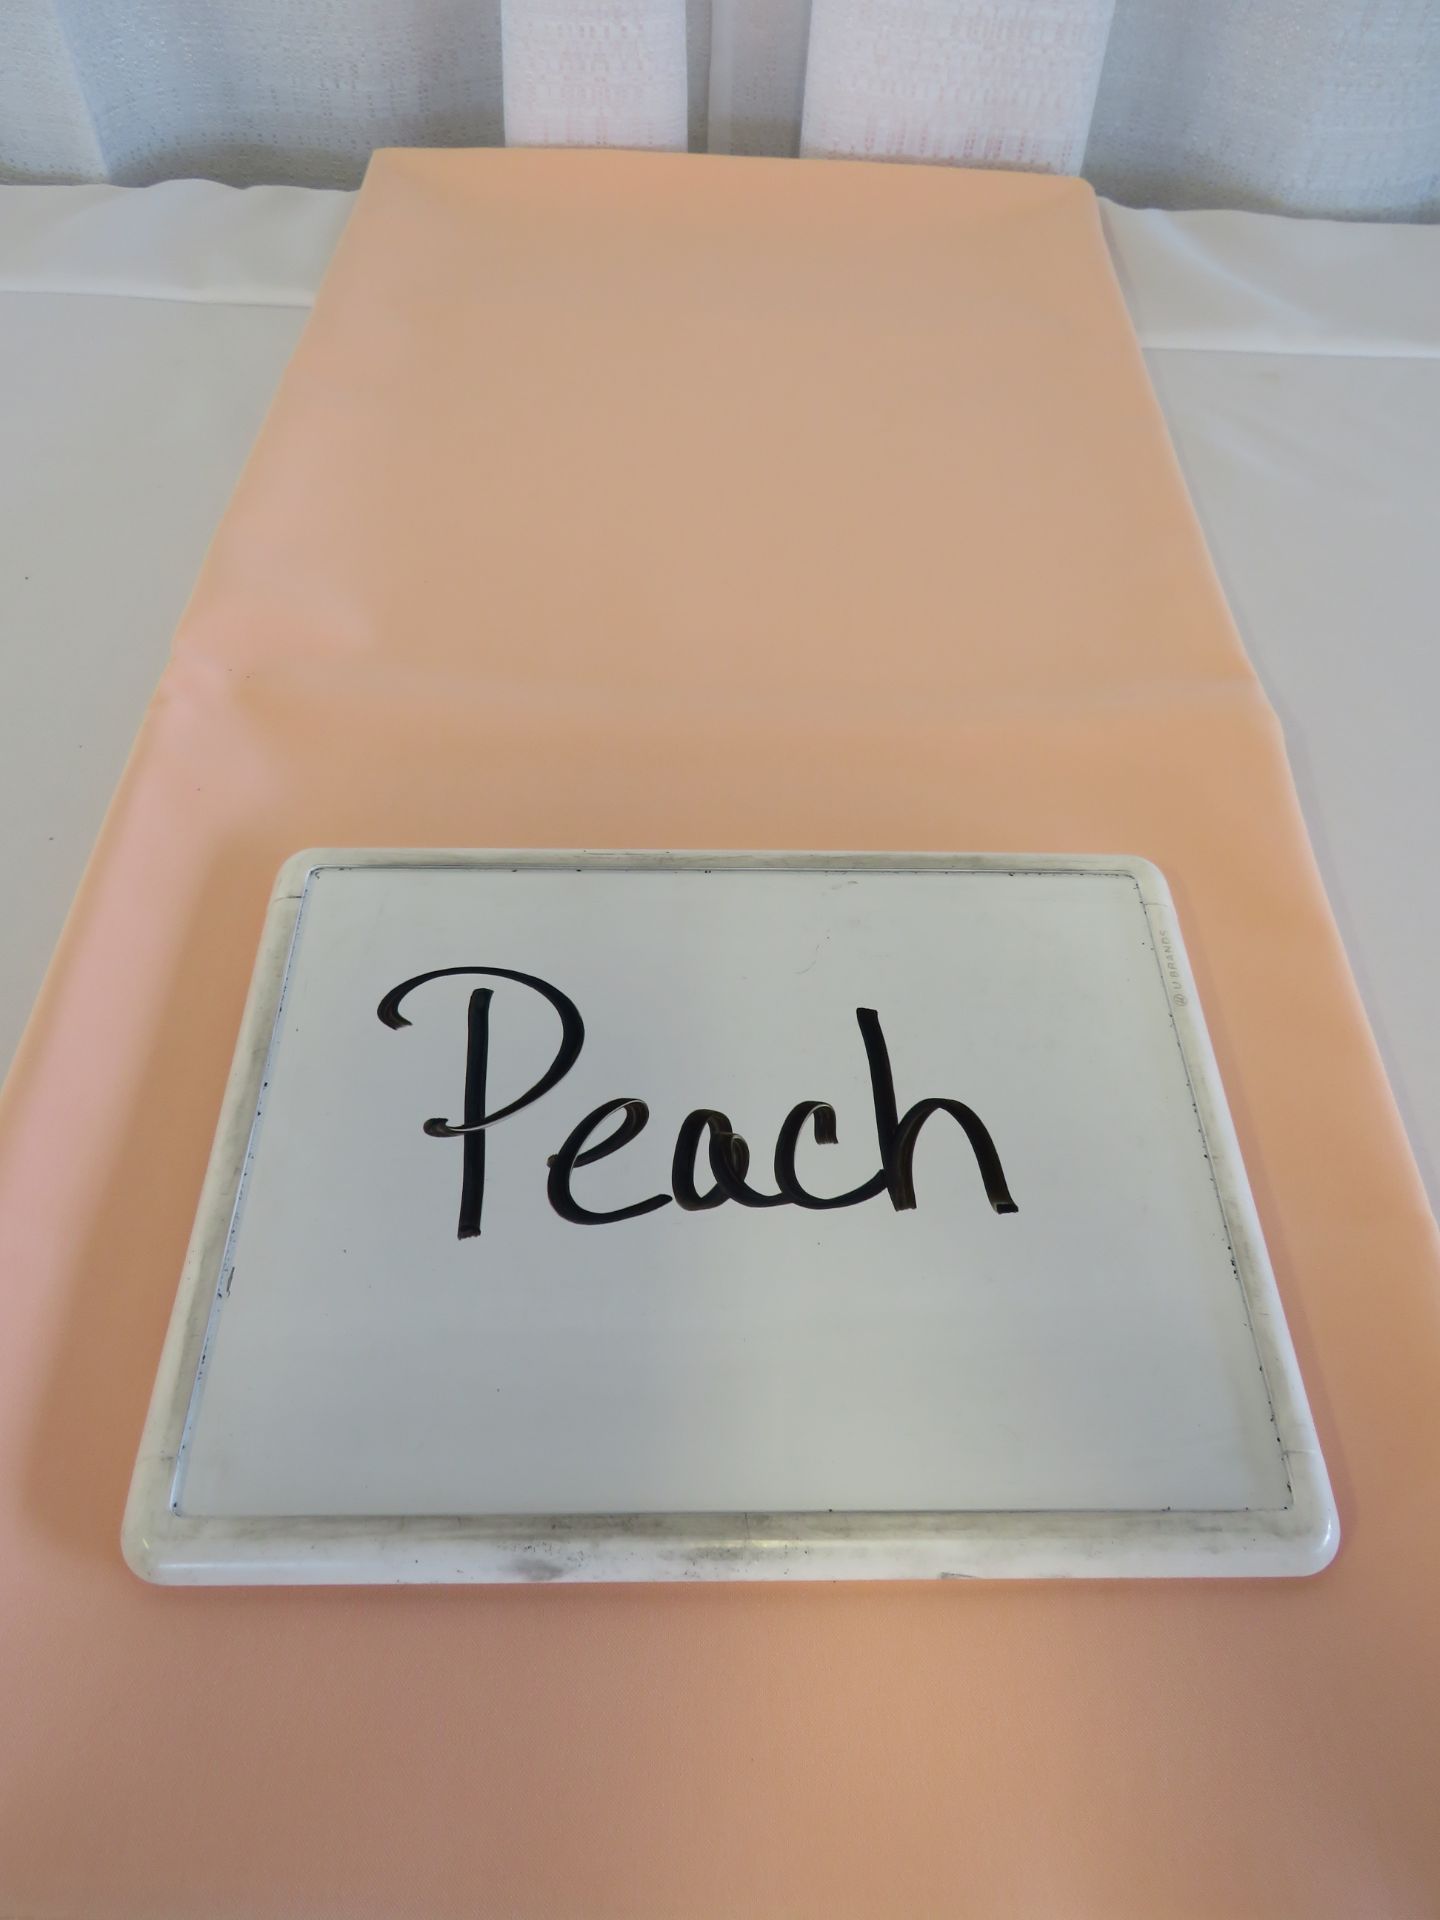 60" x 120" Tablecloth, Peach